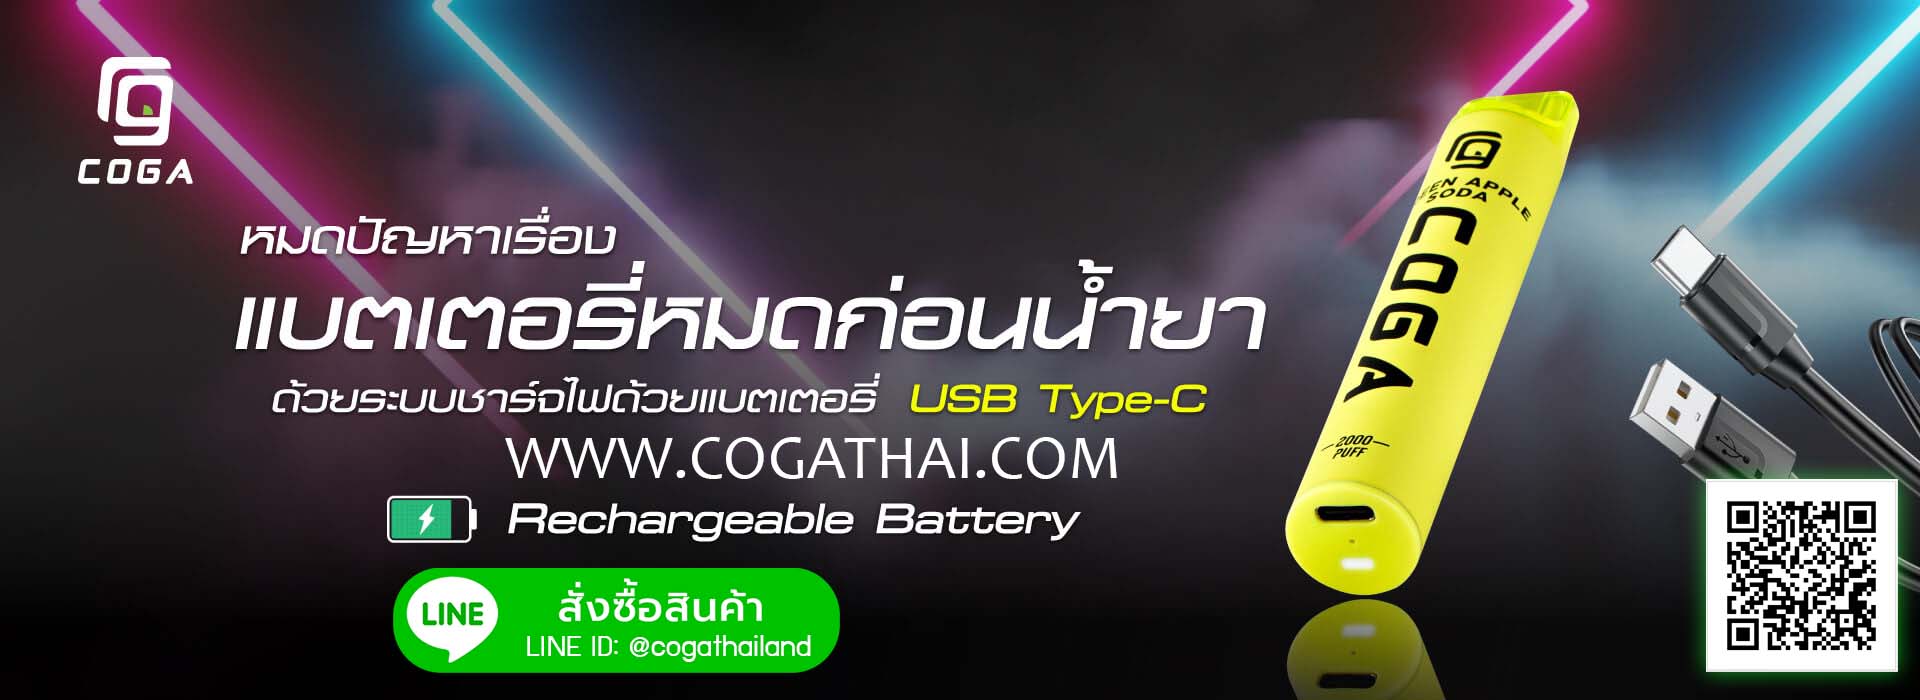 Coga Thai Banner 01